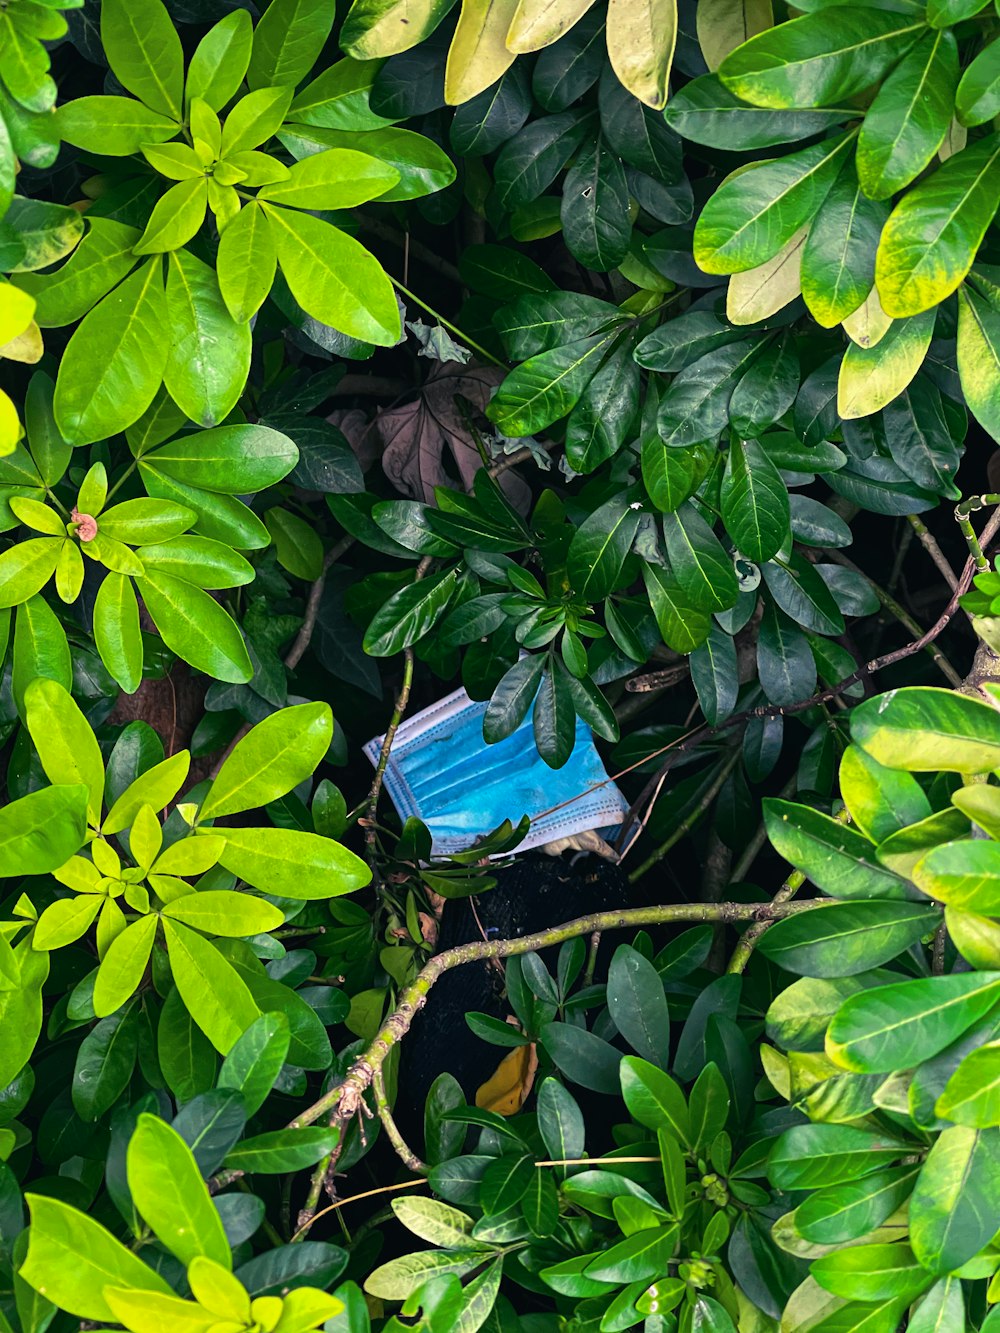 a blue birdhouse nestled among green leaves